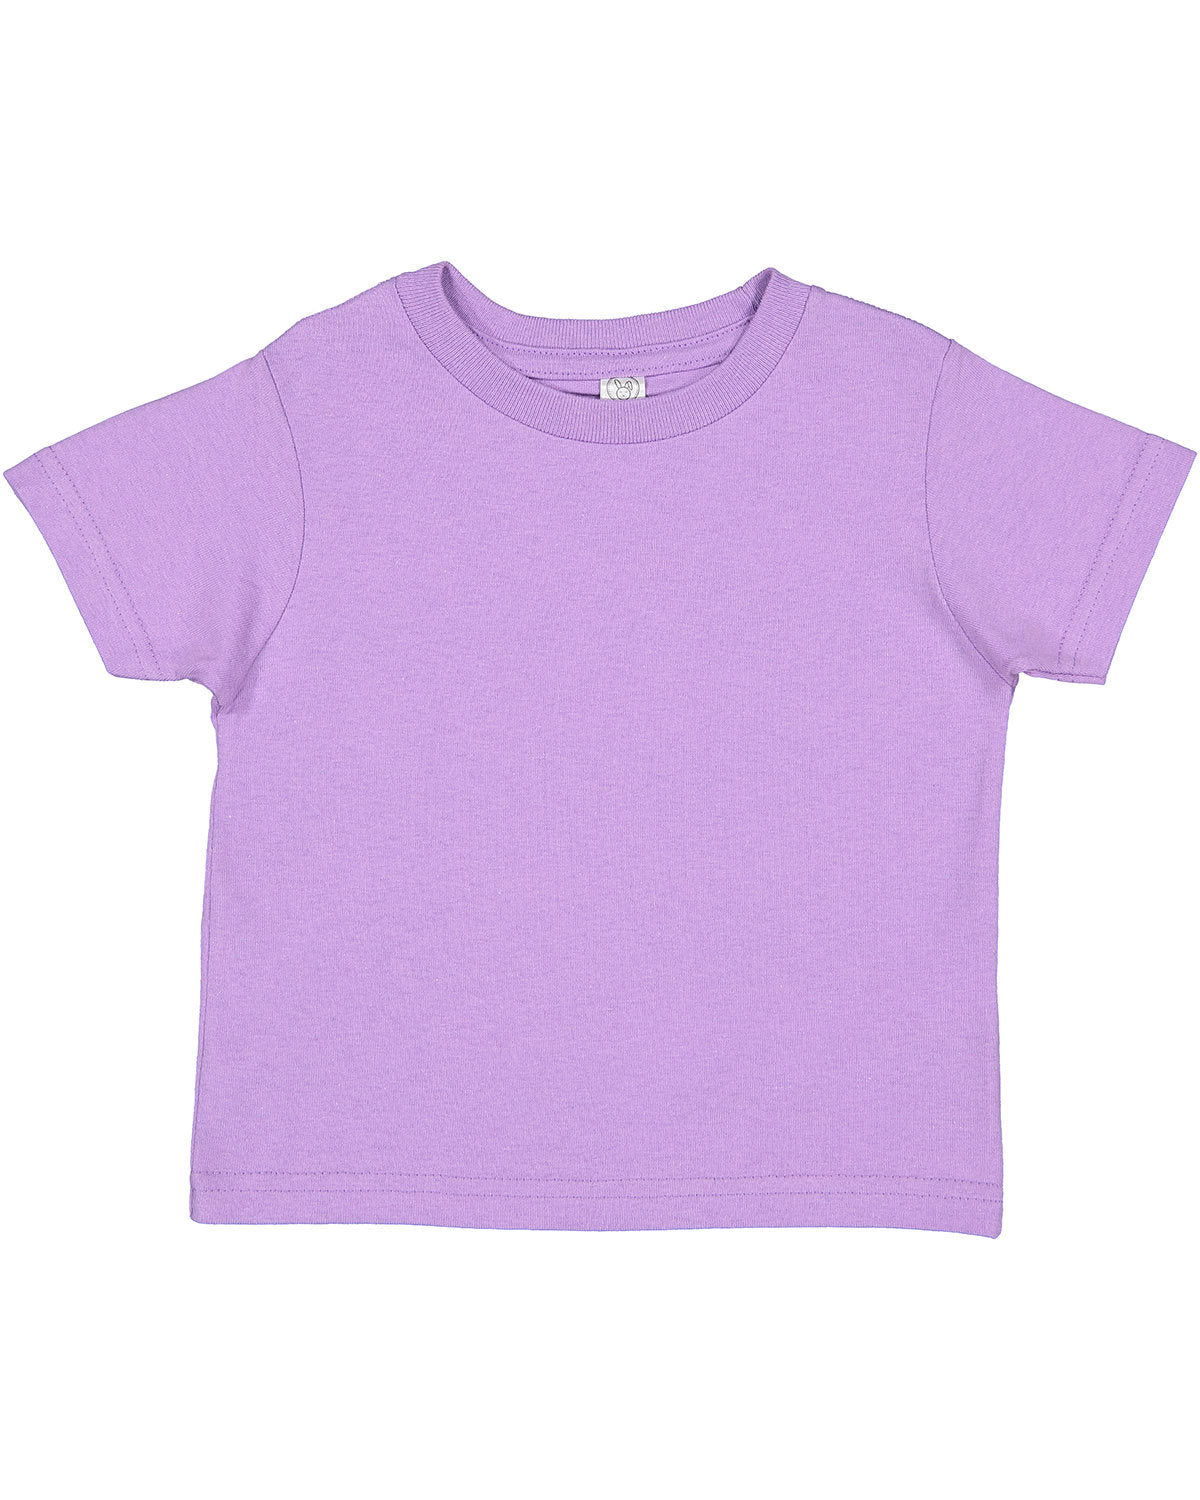 Rabbit Skins Toddler Cotton Jersey T-Shirt 2T / Lavender